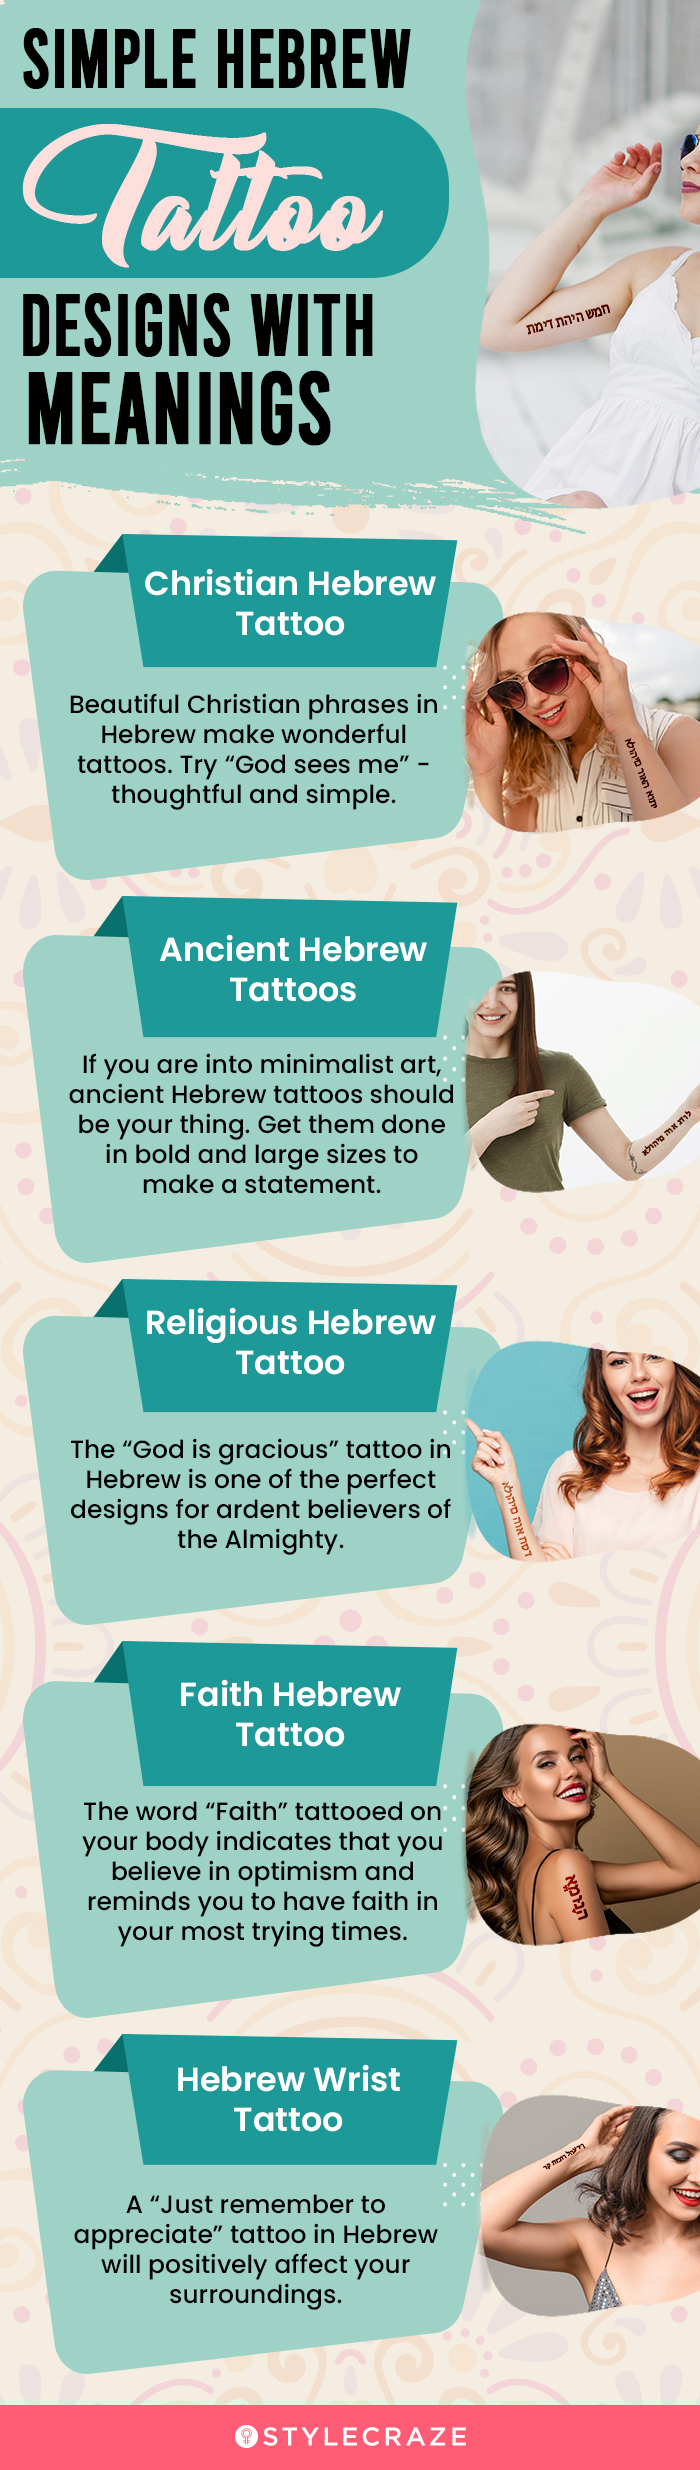 Courage in Hebrew | Wrist tattoos for women, Jewish tattoo, Hebrew tattoo